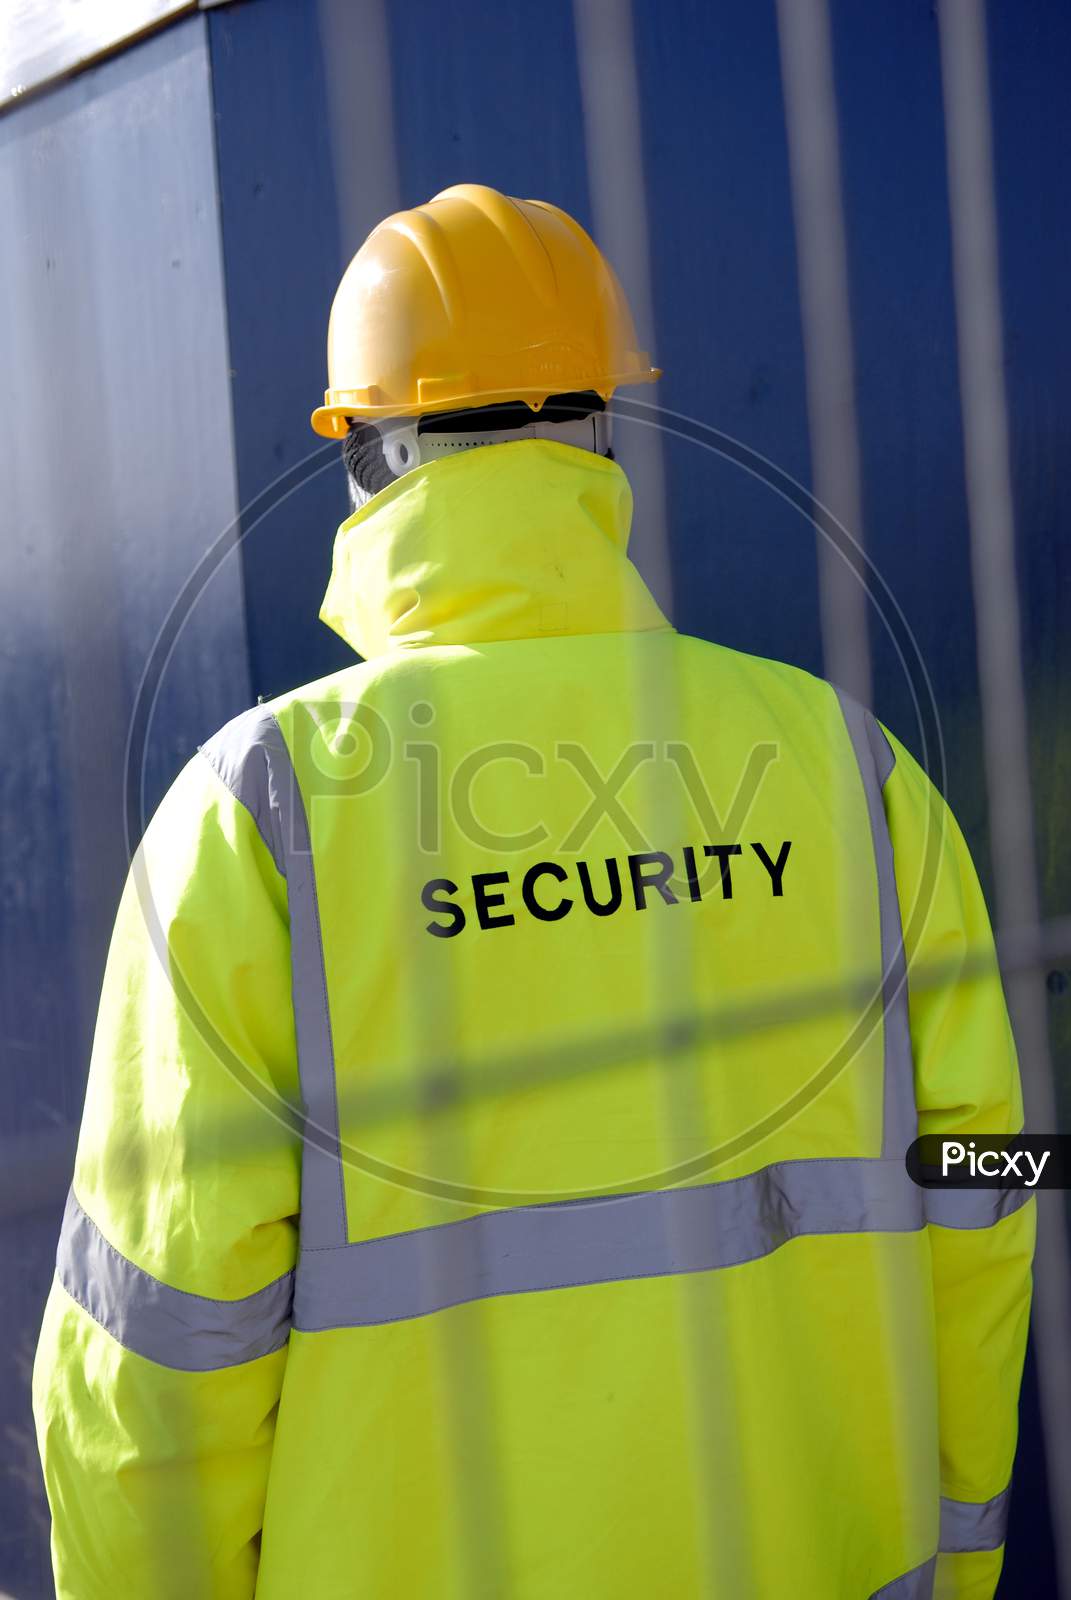 Security Worker Behind Metal Fencing Protecting Property.